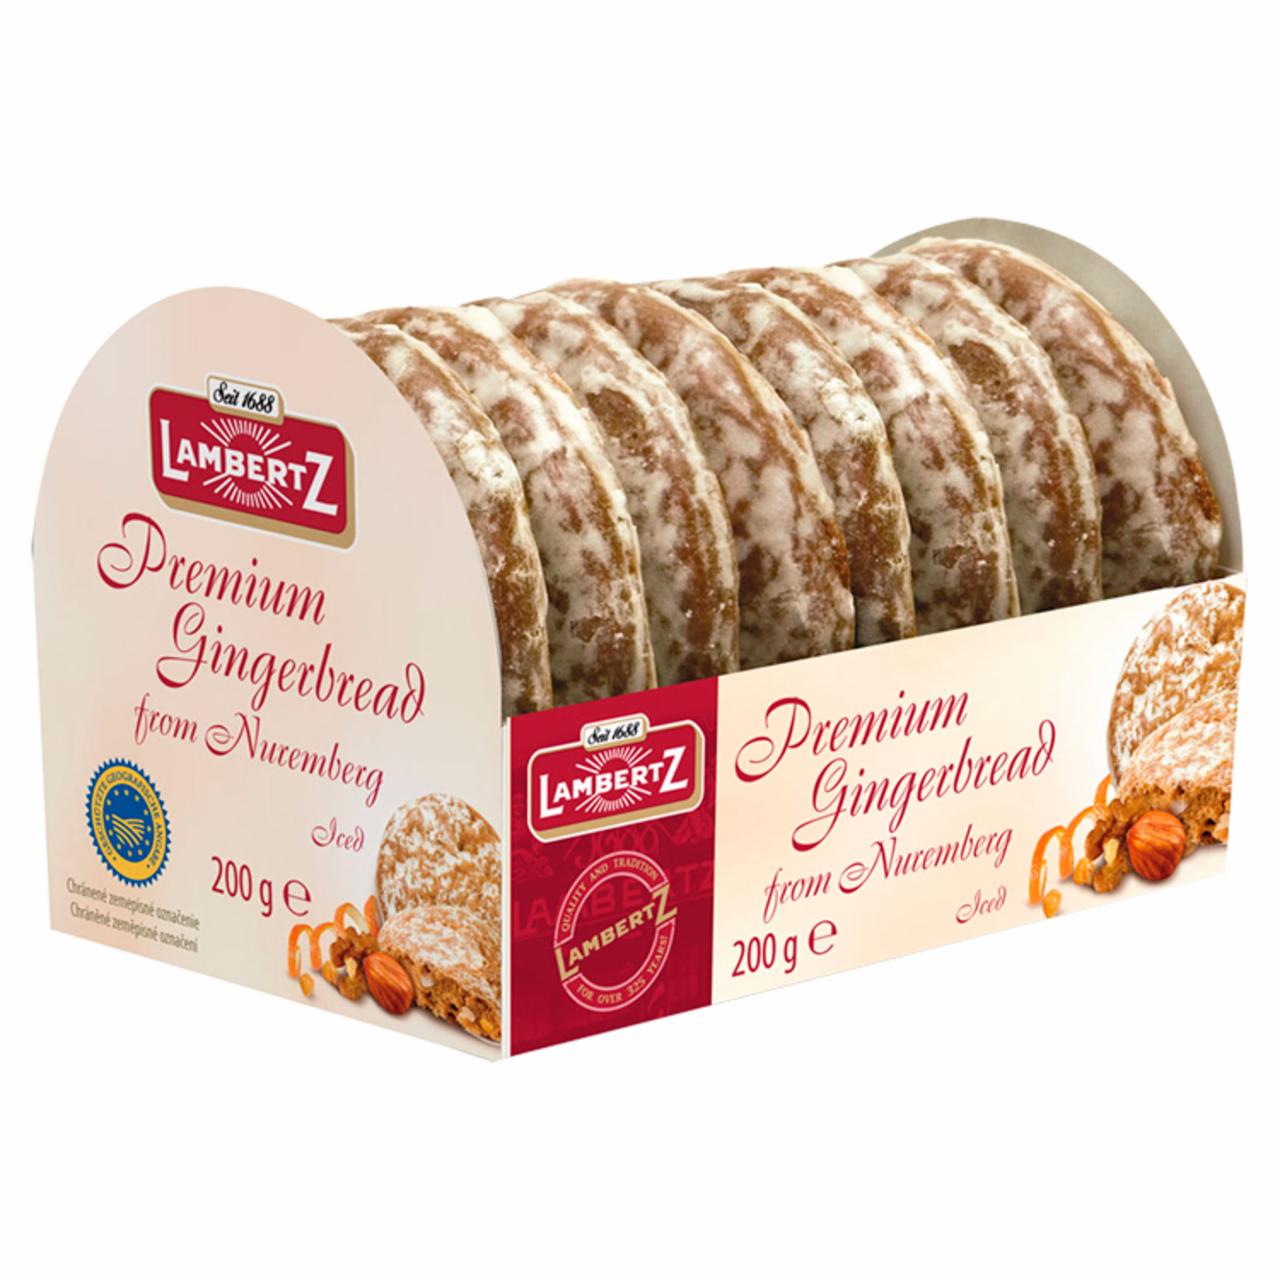 Photo - Lambertz Premium Iced Gingerbread from Nuremberg 200 g